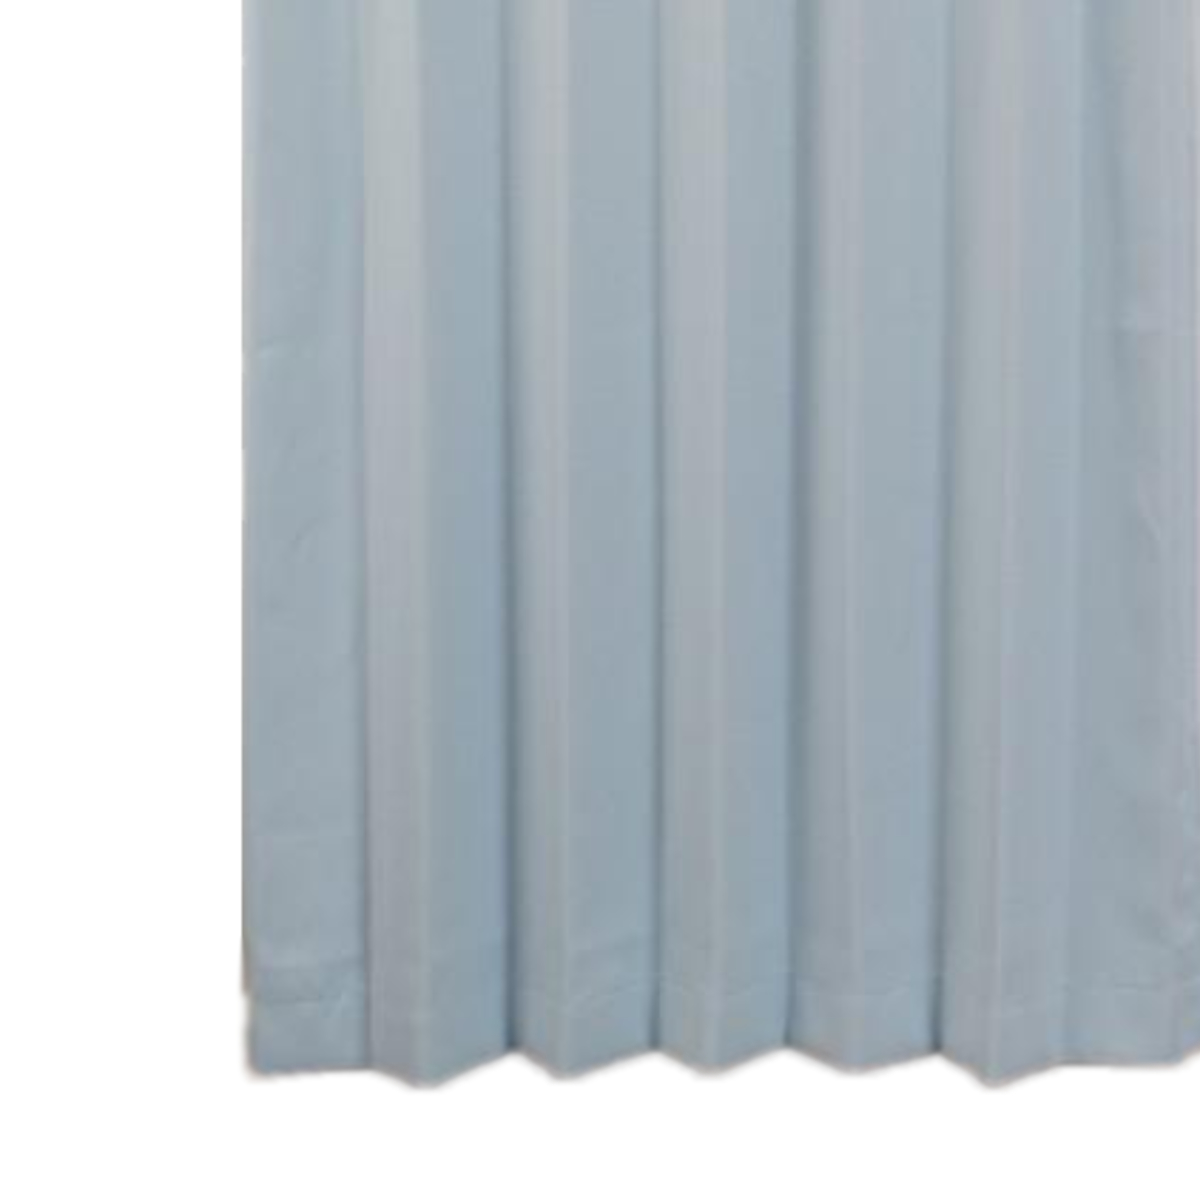 dショッピング |カーテン 2枚組 遮光 1級 ドレープカーテン ベルーイ